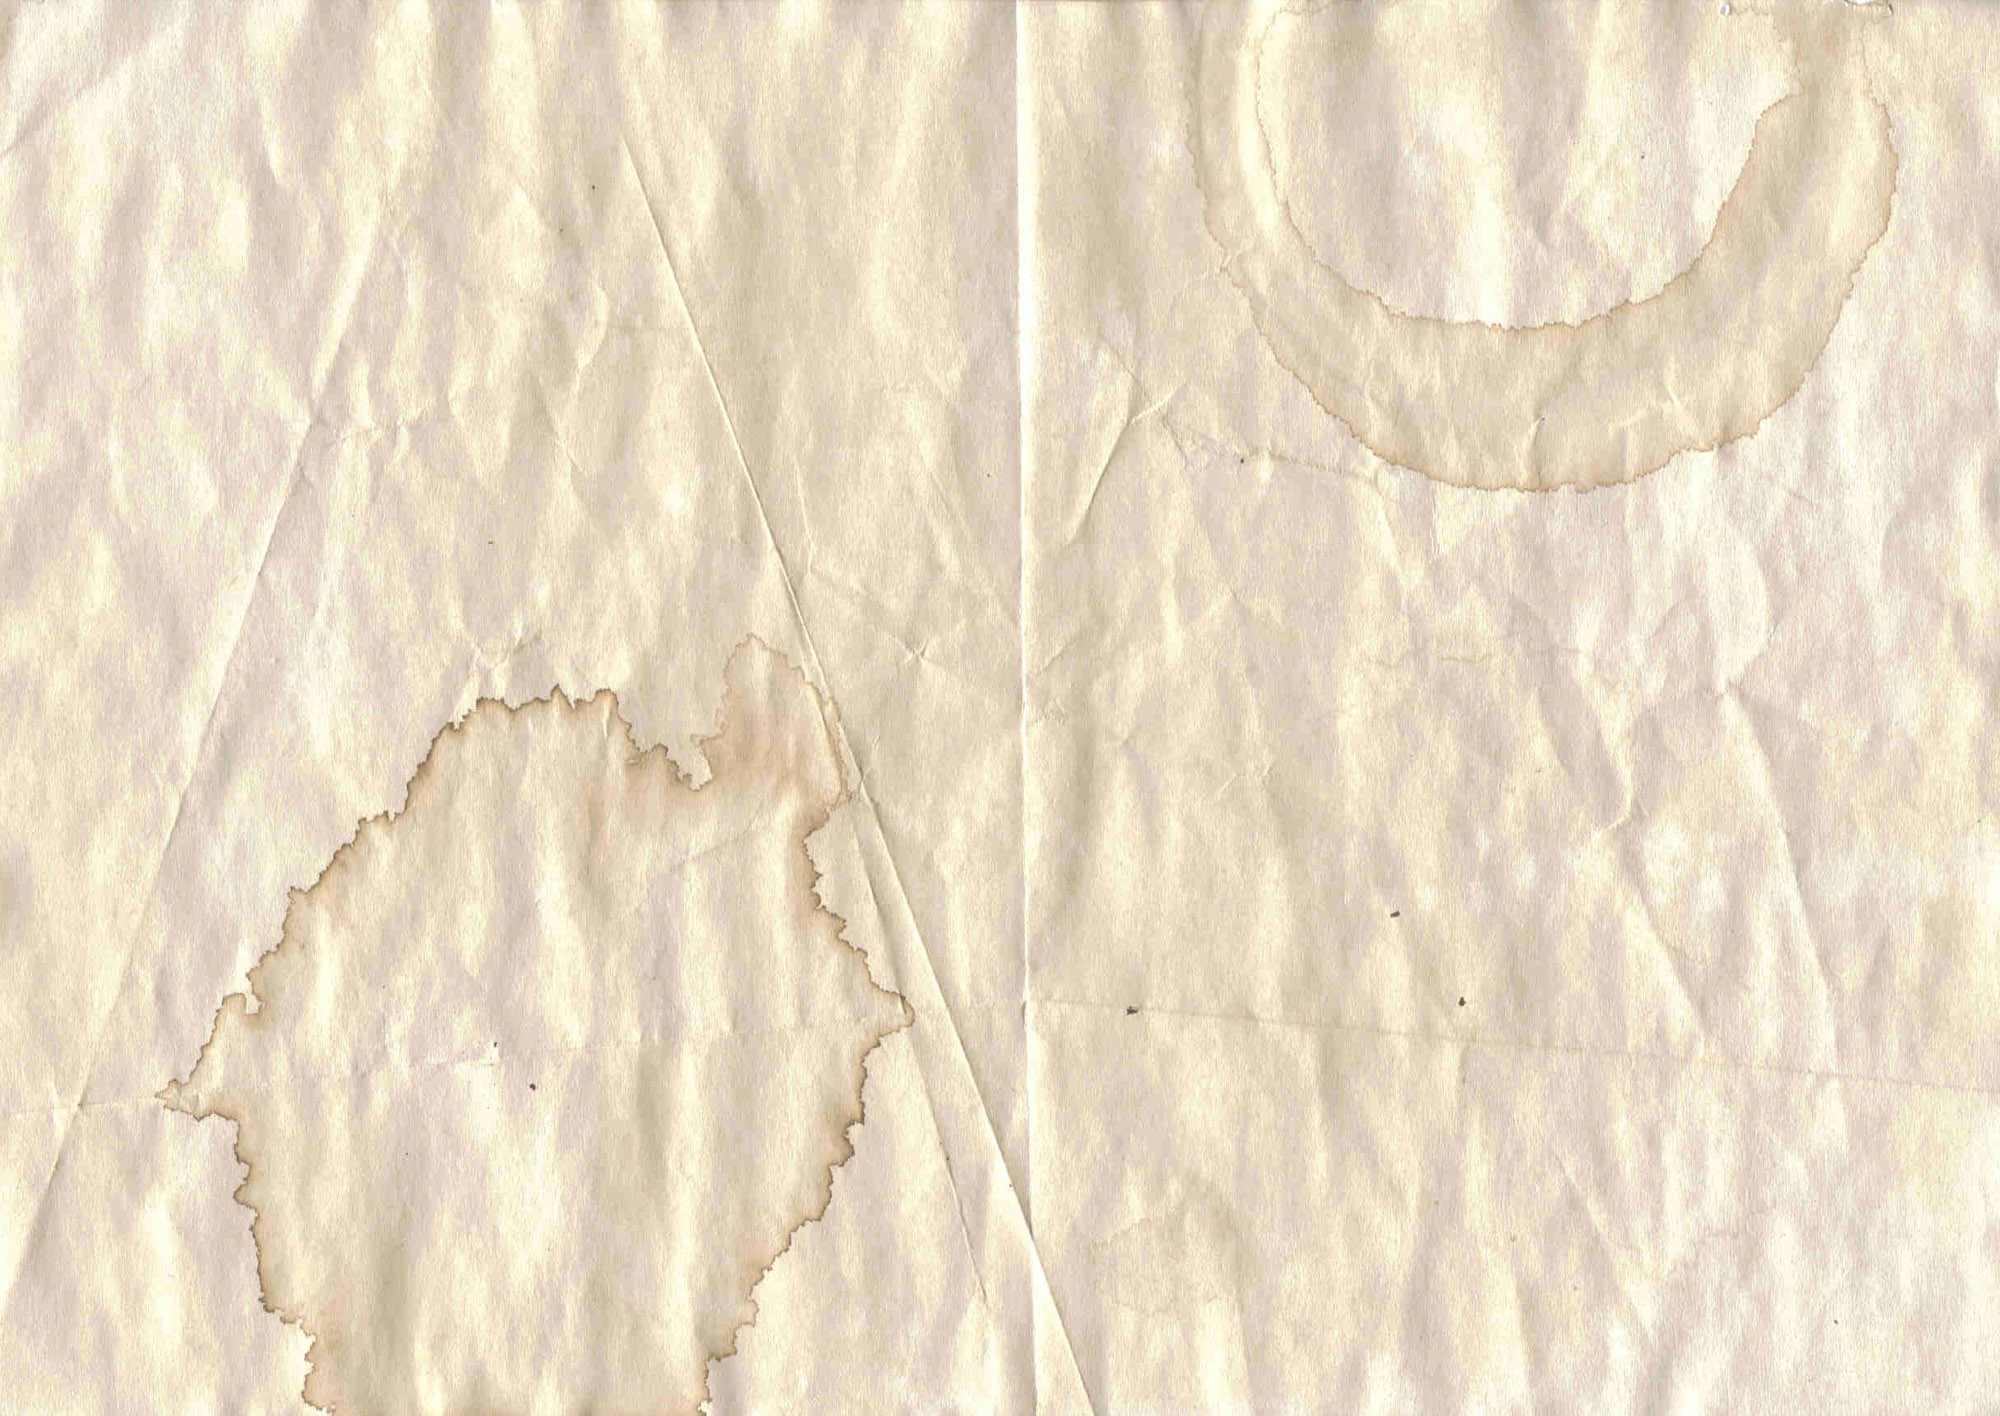 Worn Paper with Coffee Stains by Lasse Korsgaard